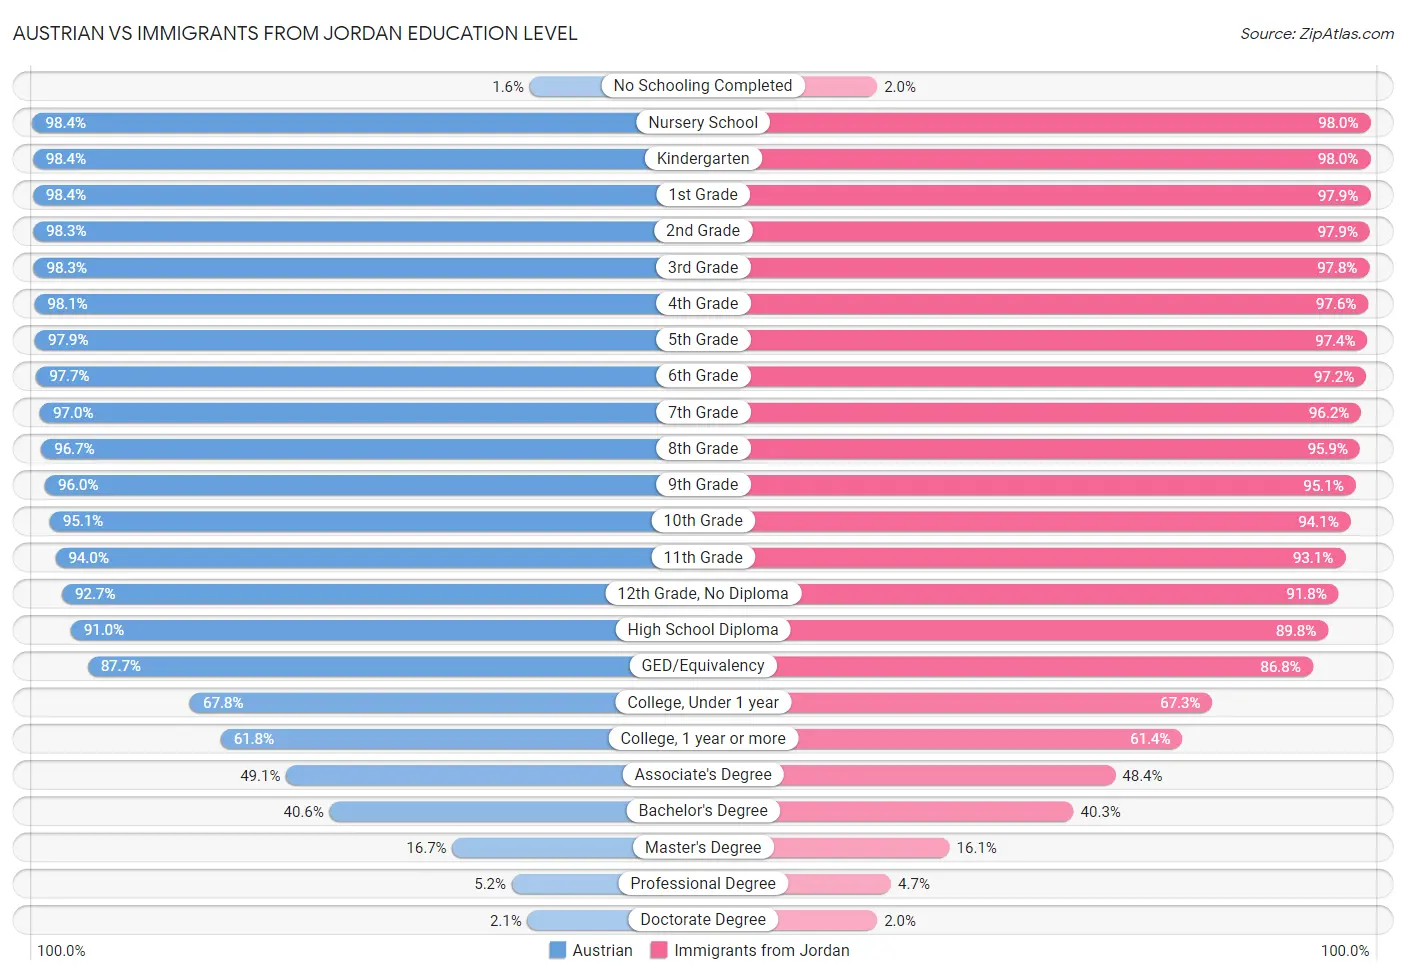 Austrian vs Immigrants from Jordan Education Level